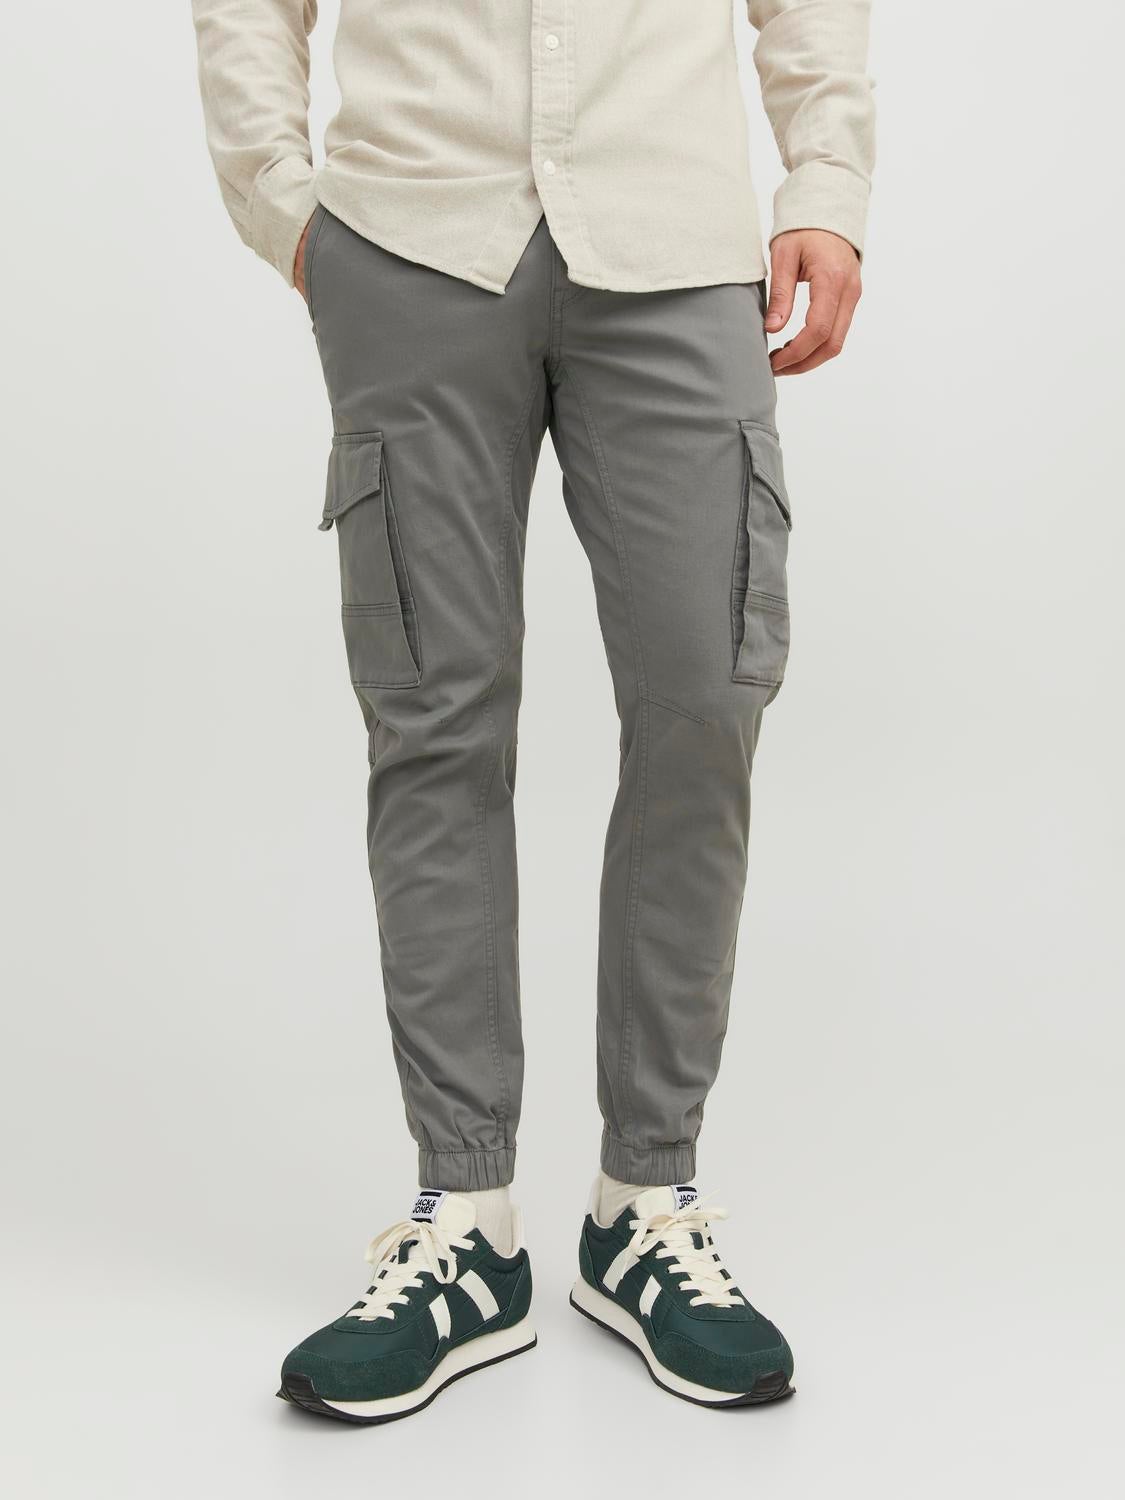 Buy Charcoal Grey Twill Cargo Trousers  W30 L30  Trousers  Argos